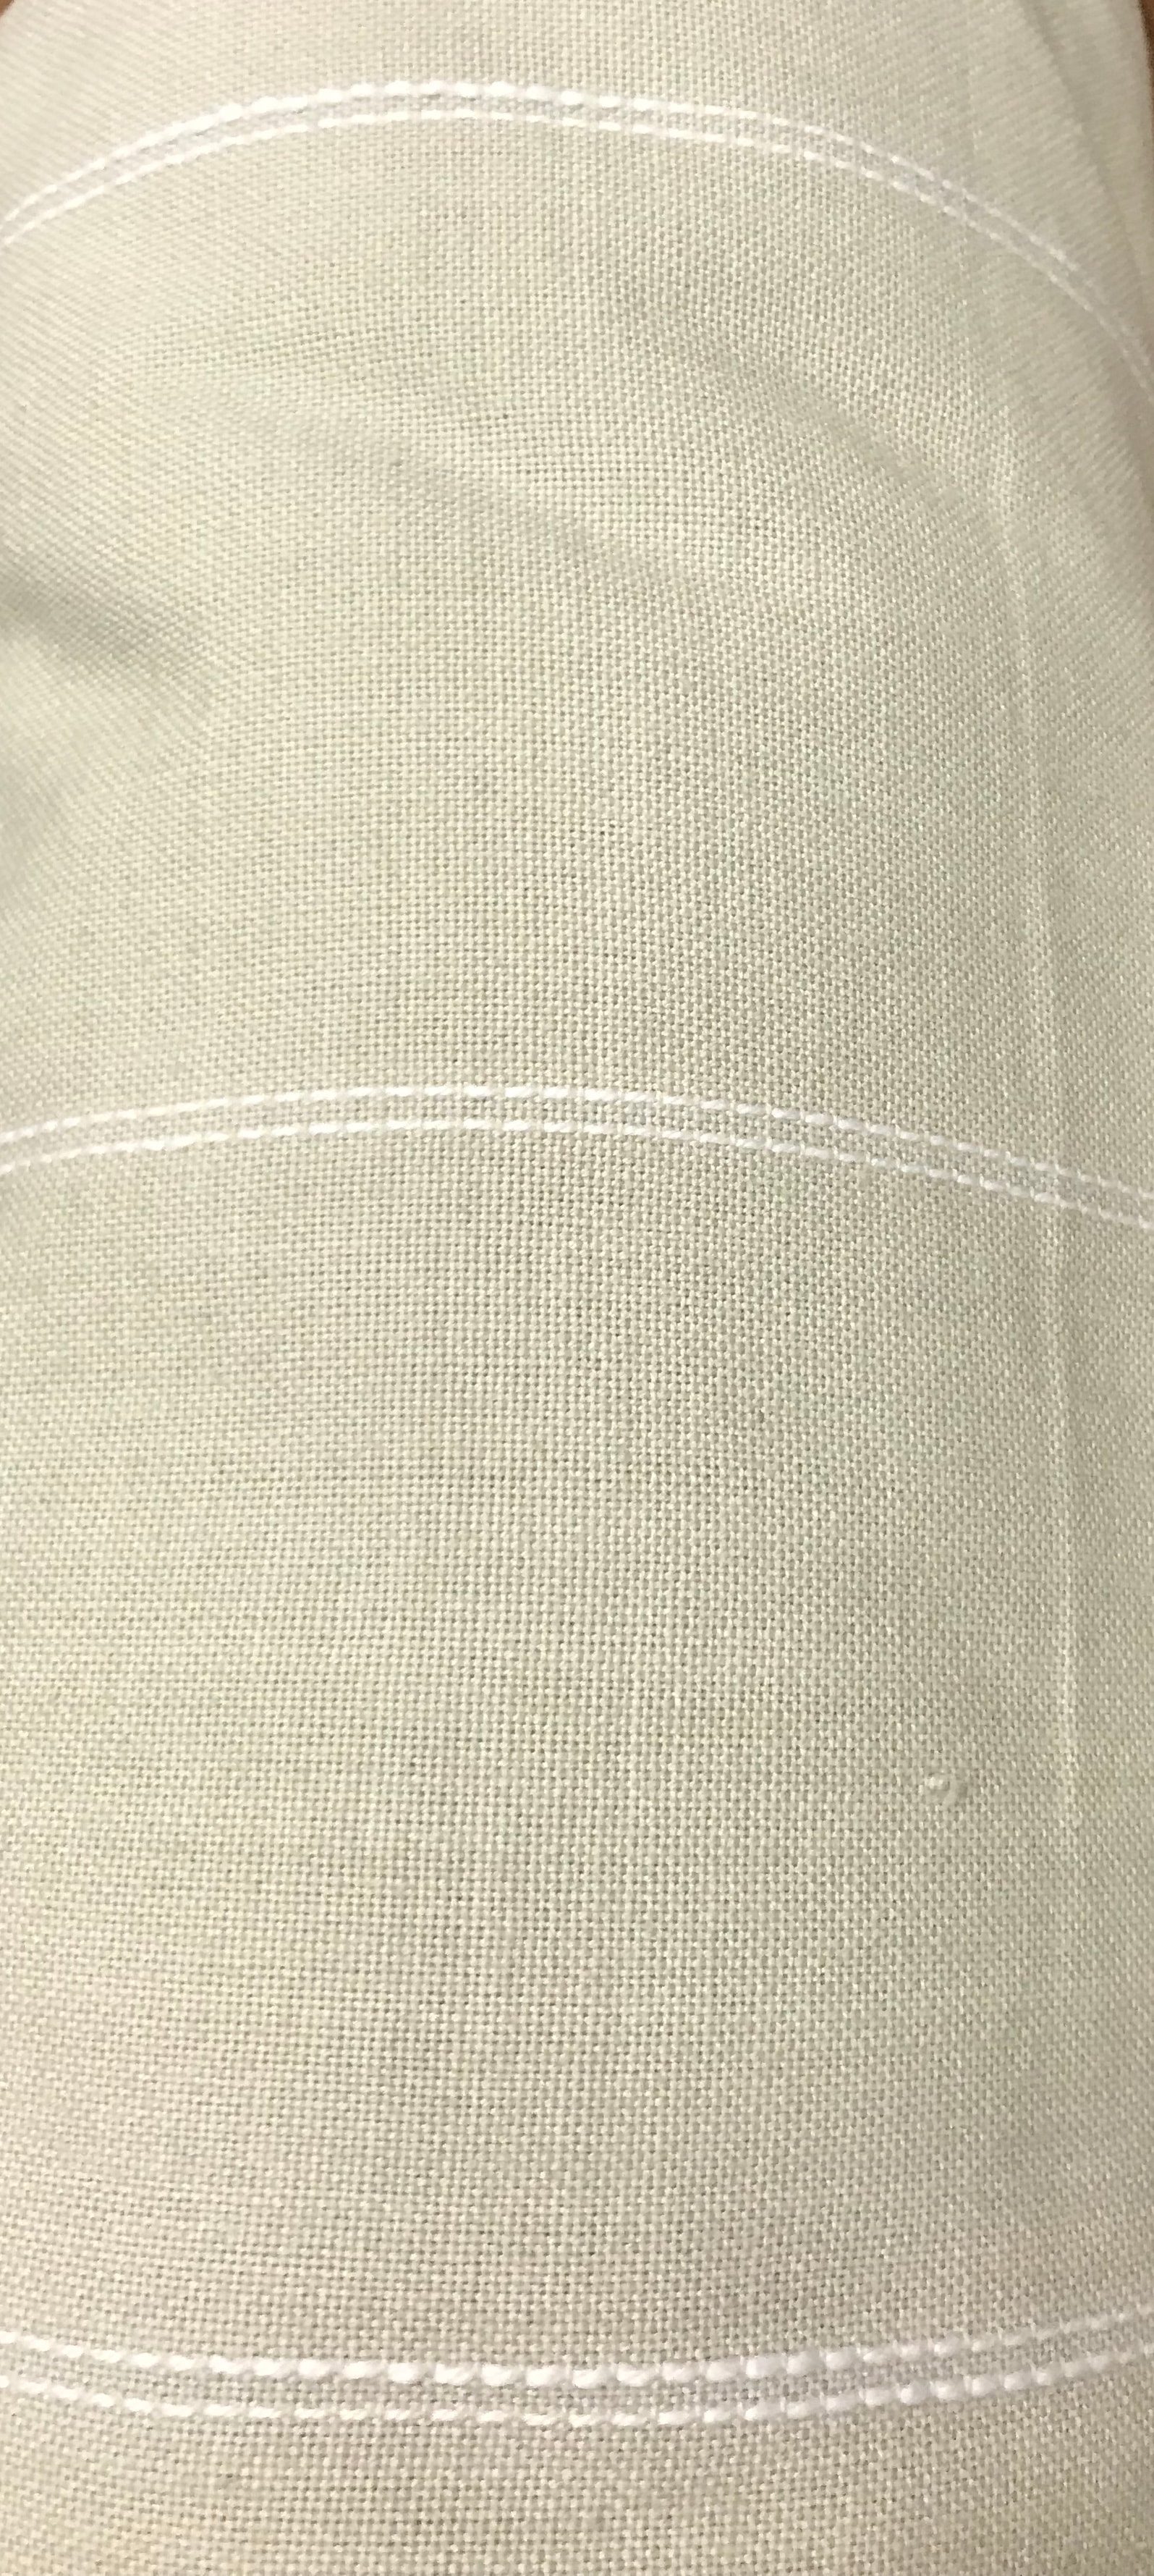 Picnic Point Tea Toweling - Linen - Grey/White